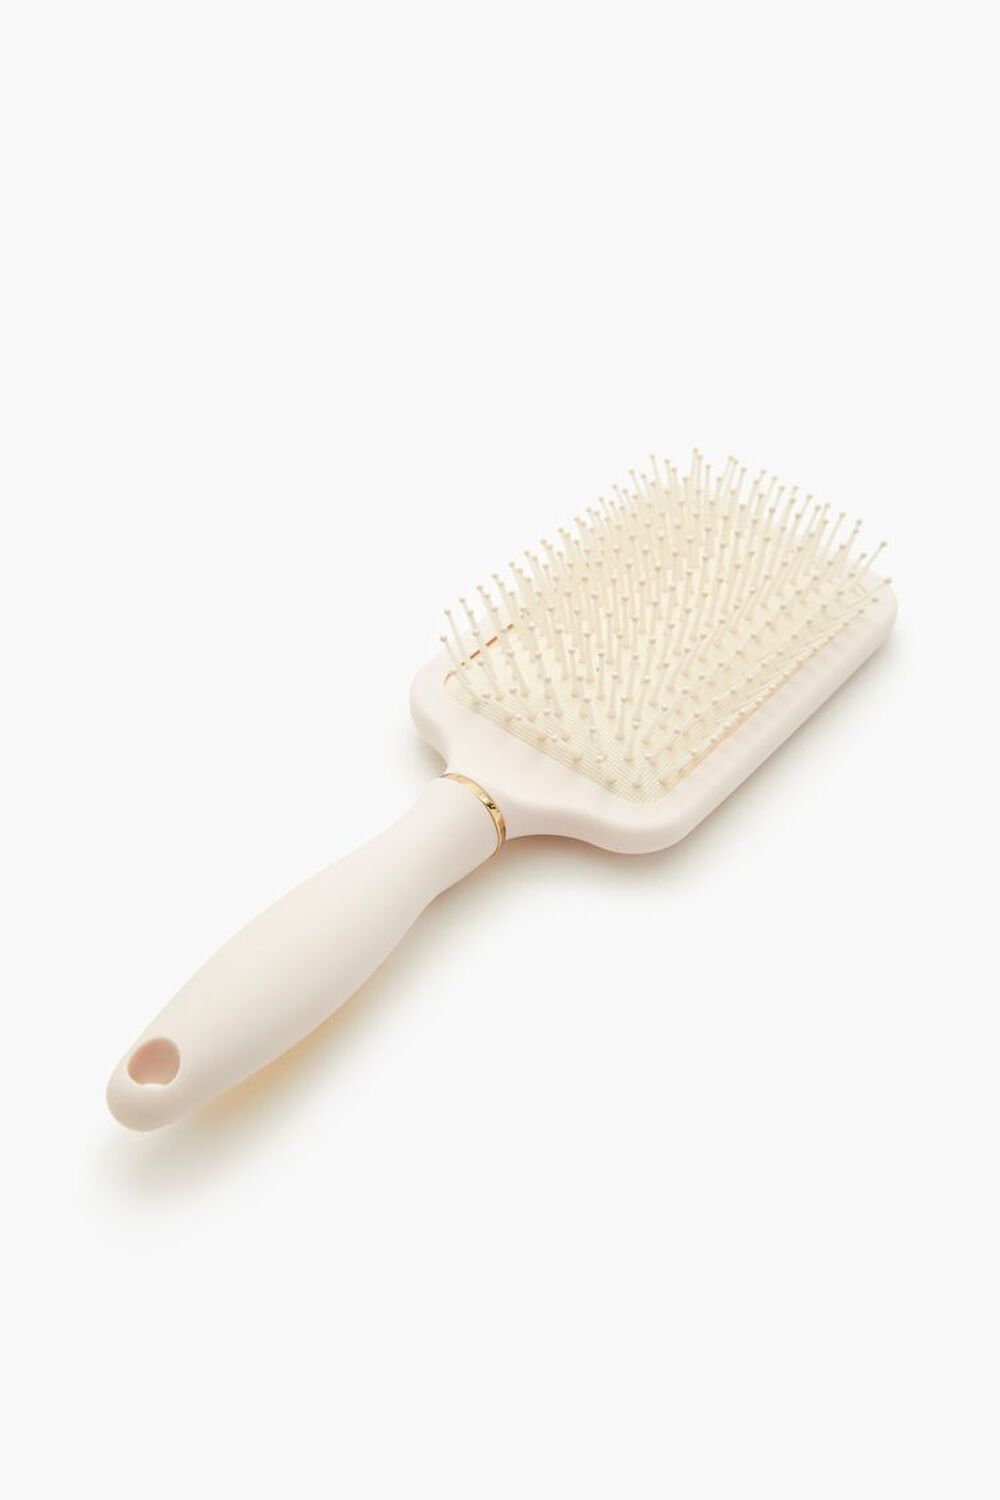 CREAM/ROSE GOLD Square Paddle Hair Brush, image 3